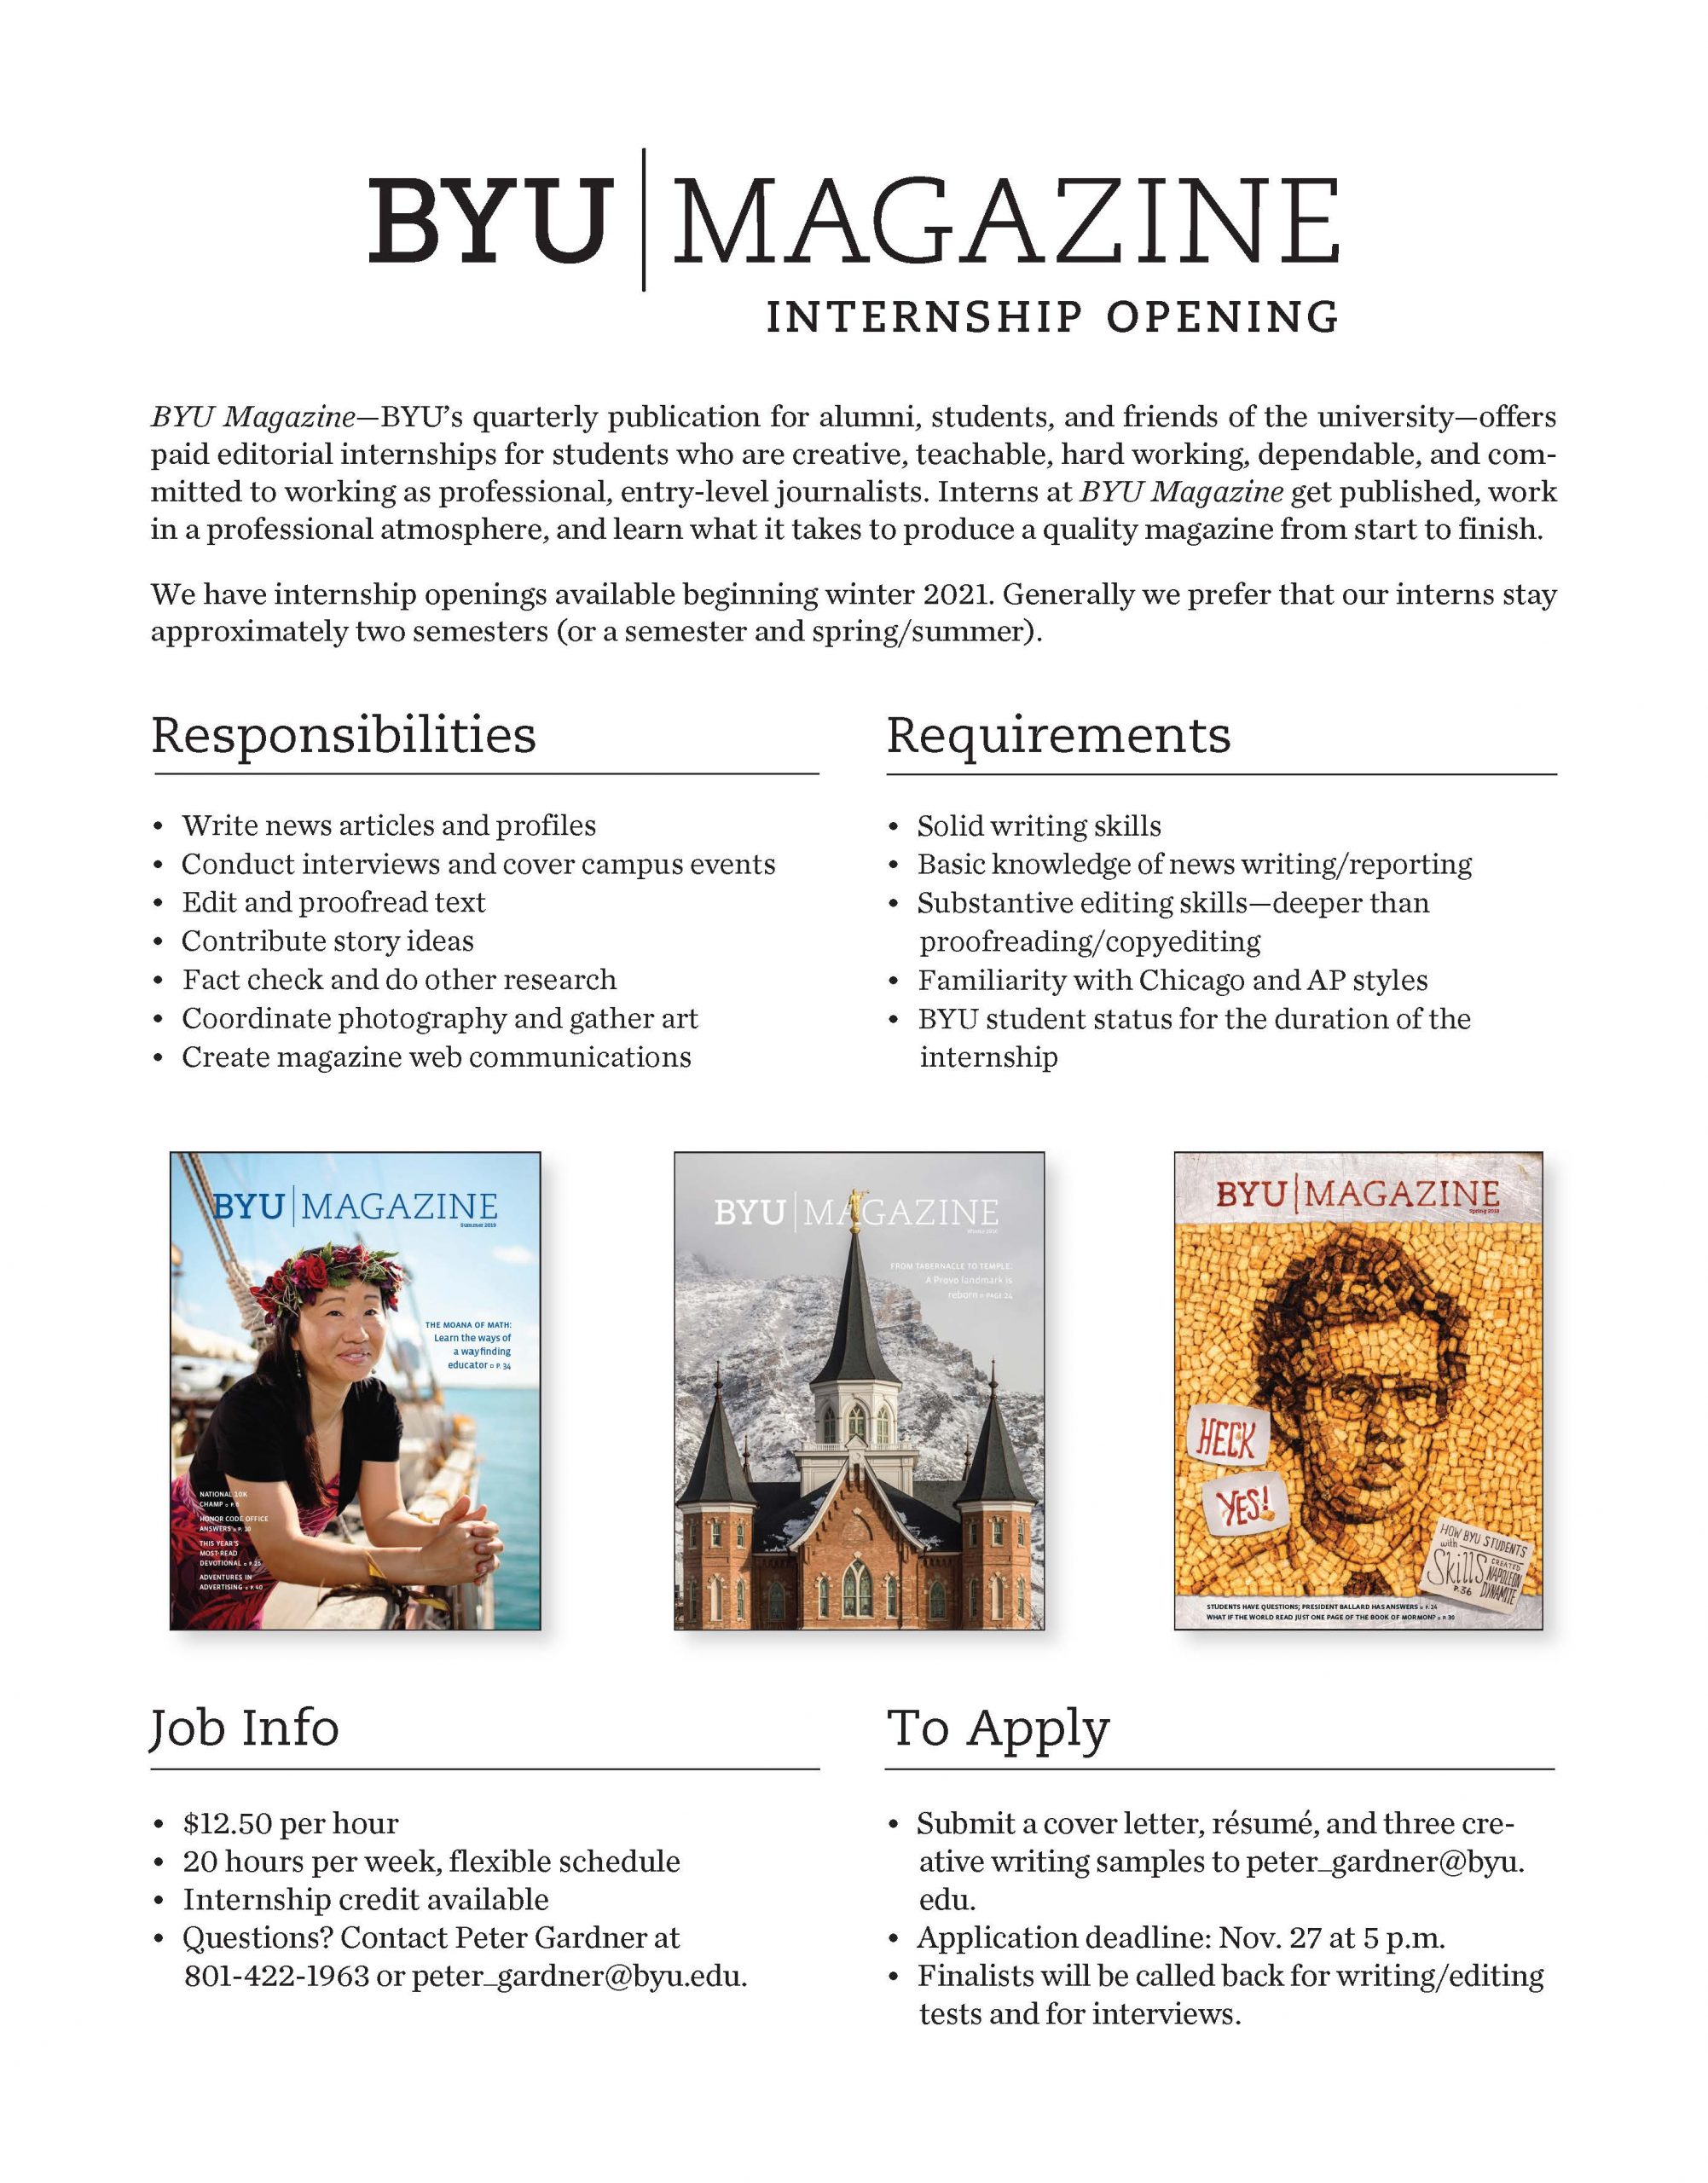 Apply by Nov. 27 to Intern with BYU Magazine! (PAID) English Internships